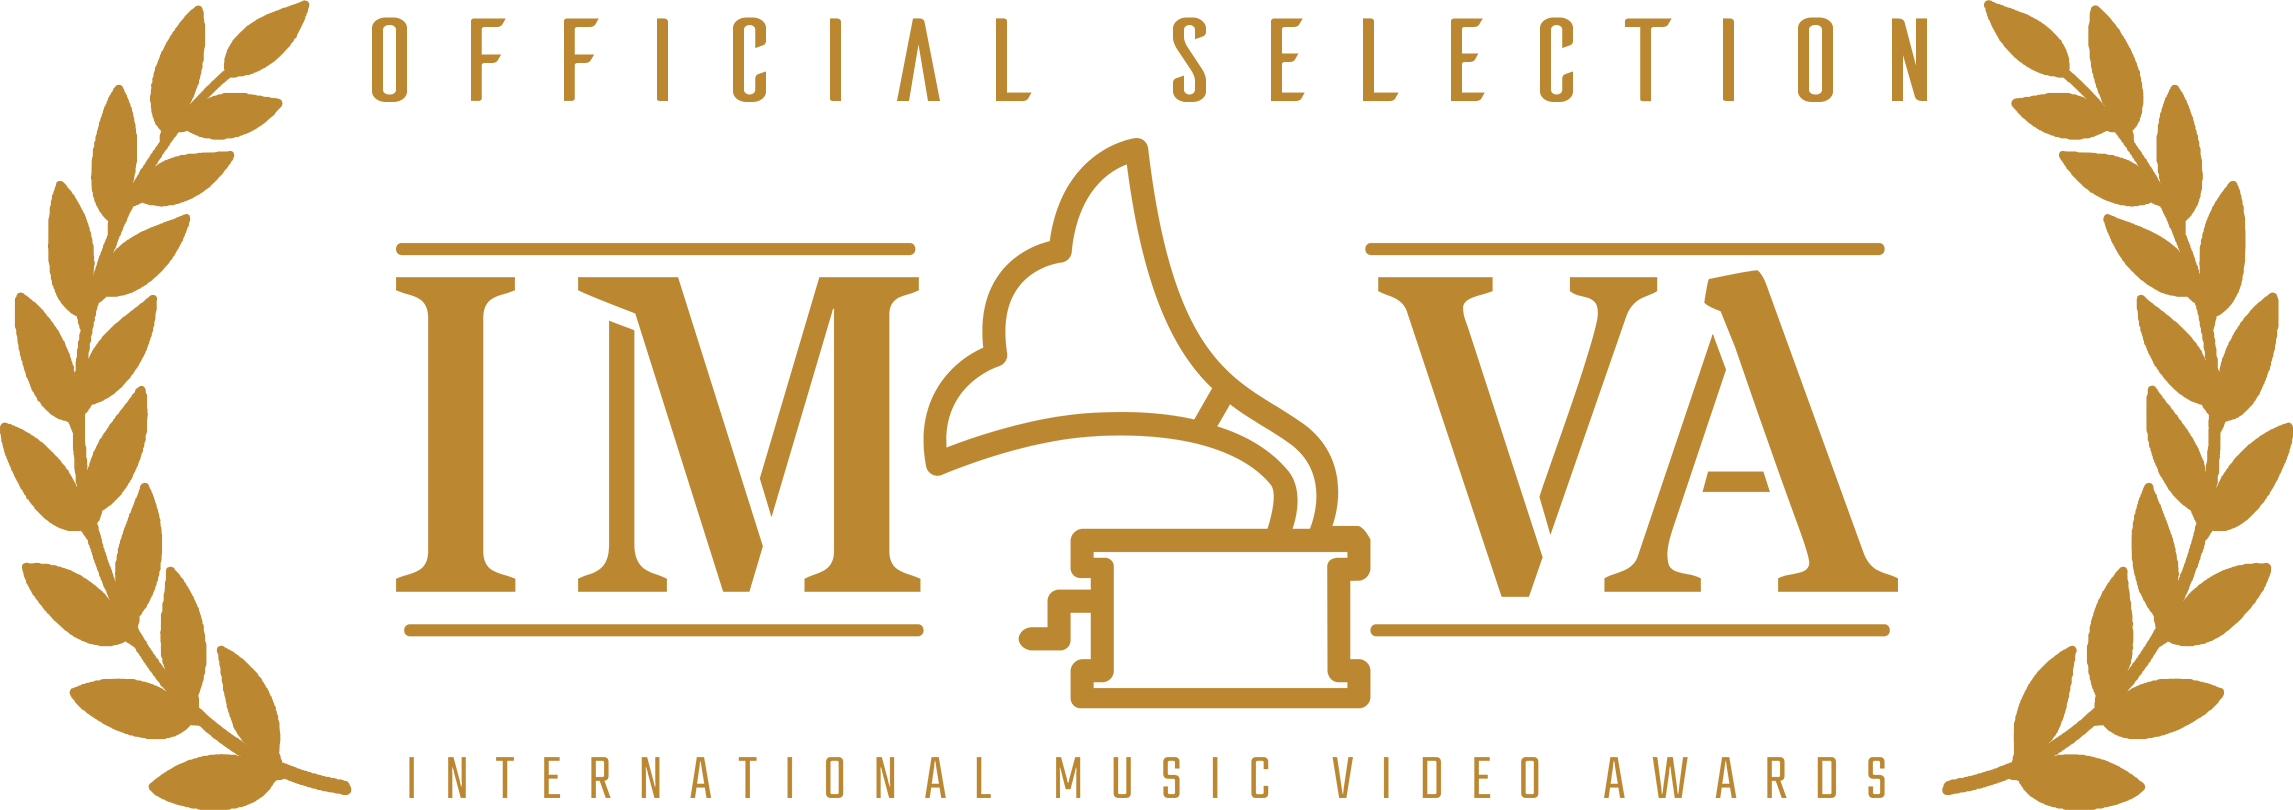 IMVA_Official_Selection